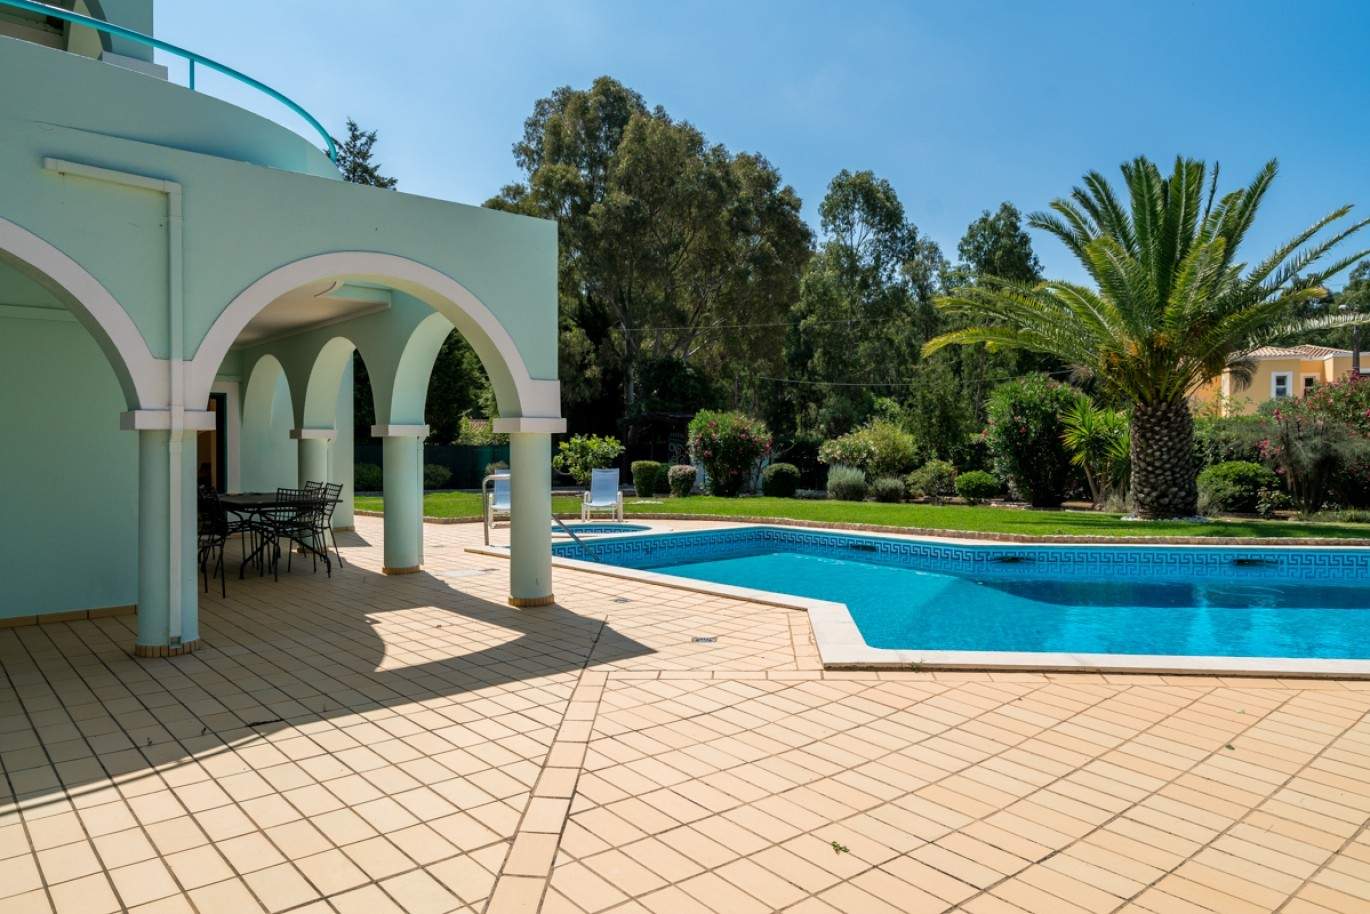 Venta de vivienda con piscina en la Penina, Alvor, Algarve, Portugal_83412